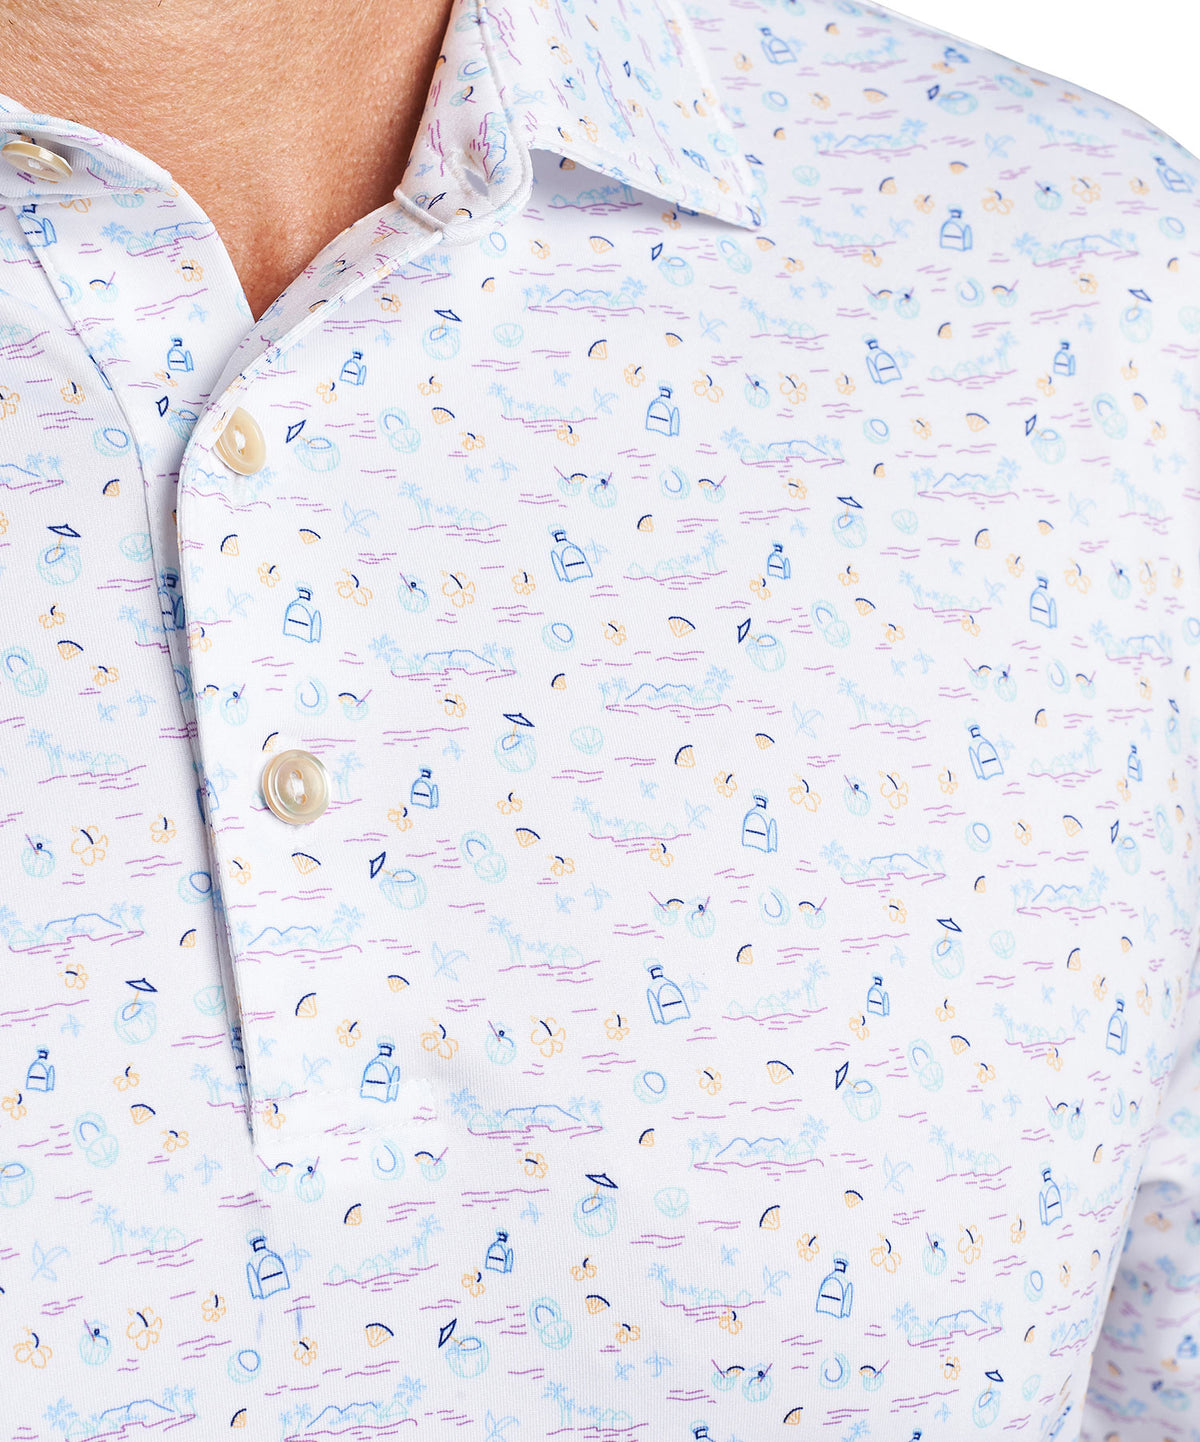 Peter Millar Short Sleeve Fiji Print Polo Knit Shirt, Big & Tall